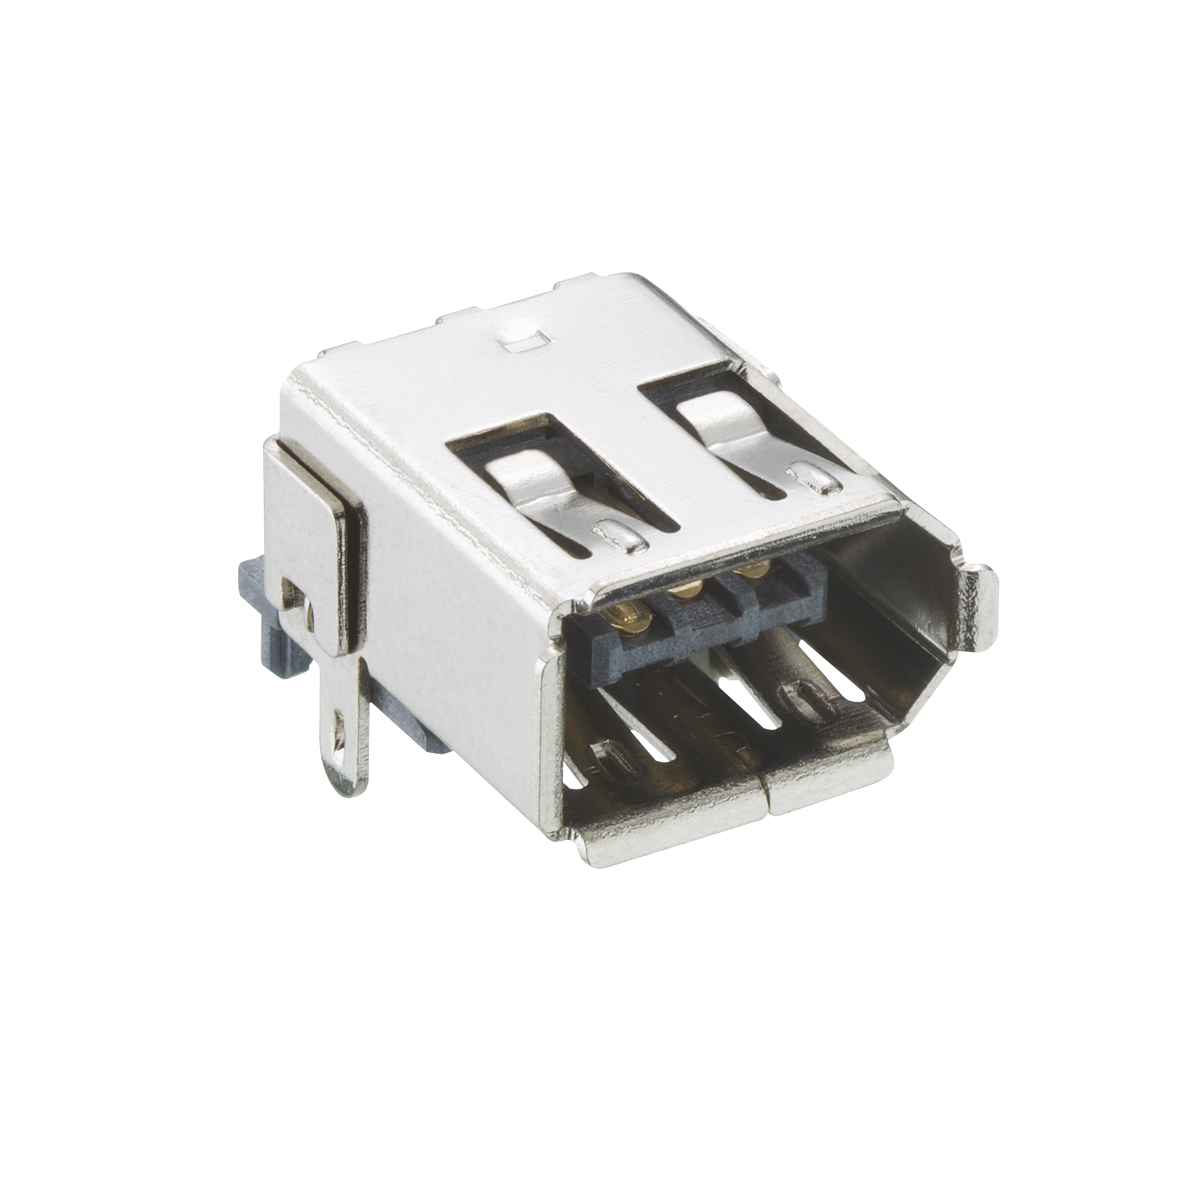 Lumberg: 2417 03 (Series 24 | USB and IEEE 1394 connectors)